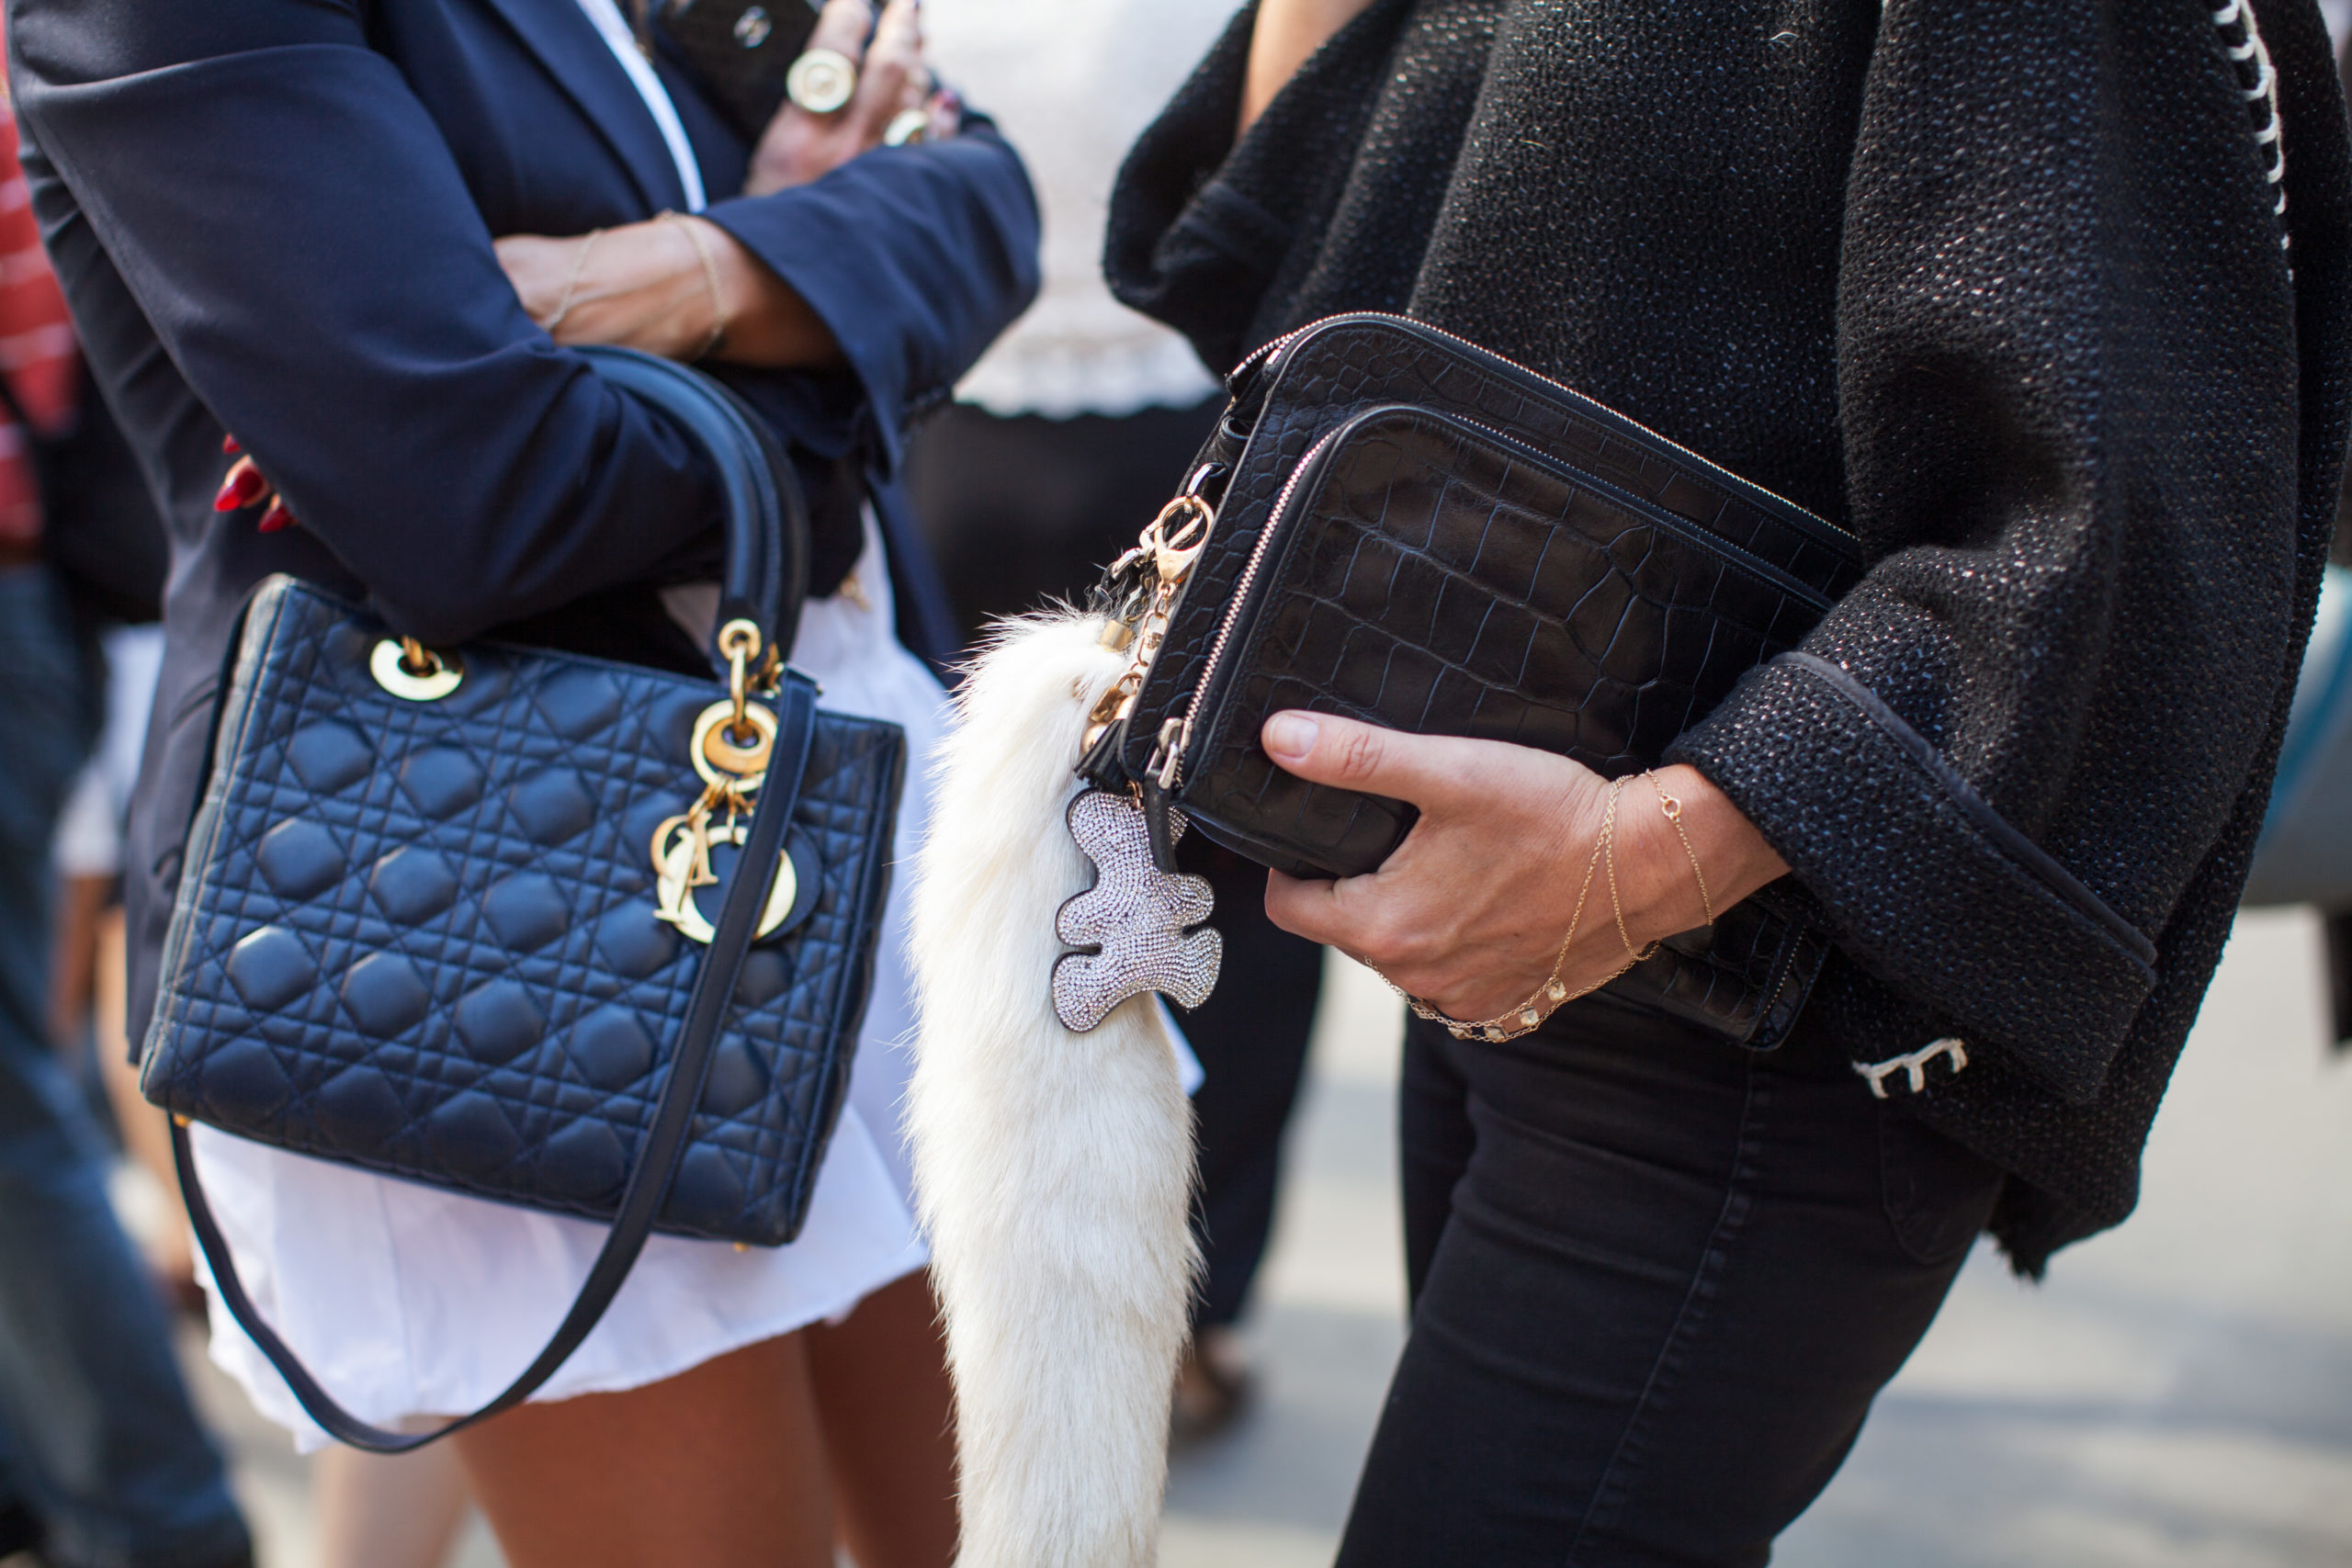 Buy Lady Dior Mini Street Style